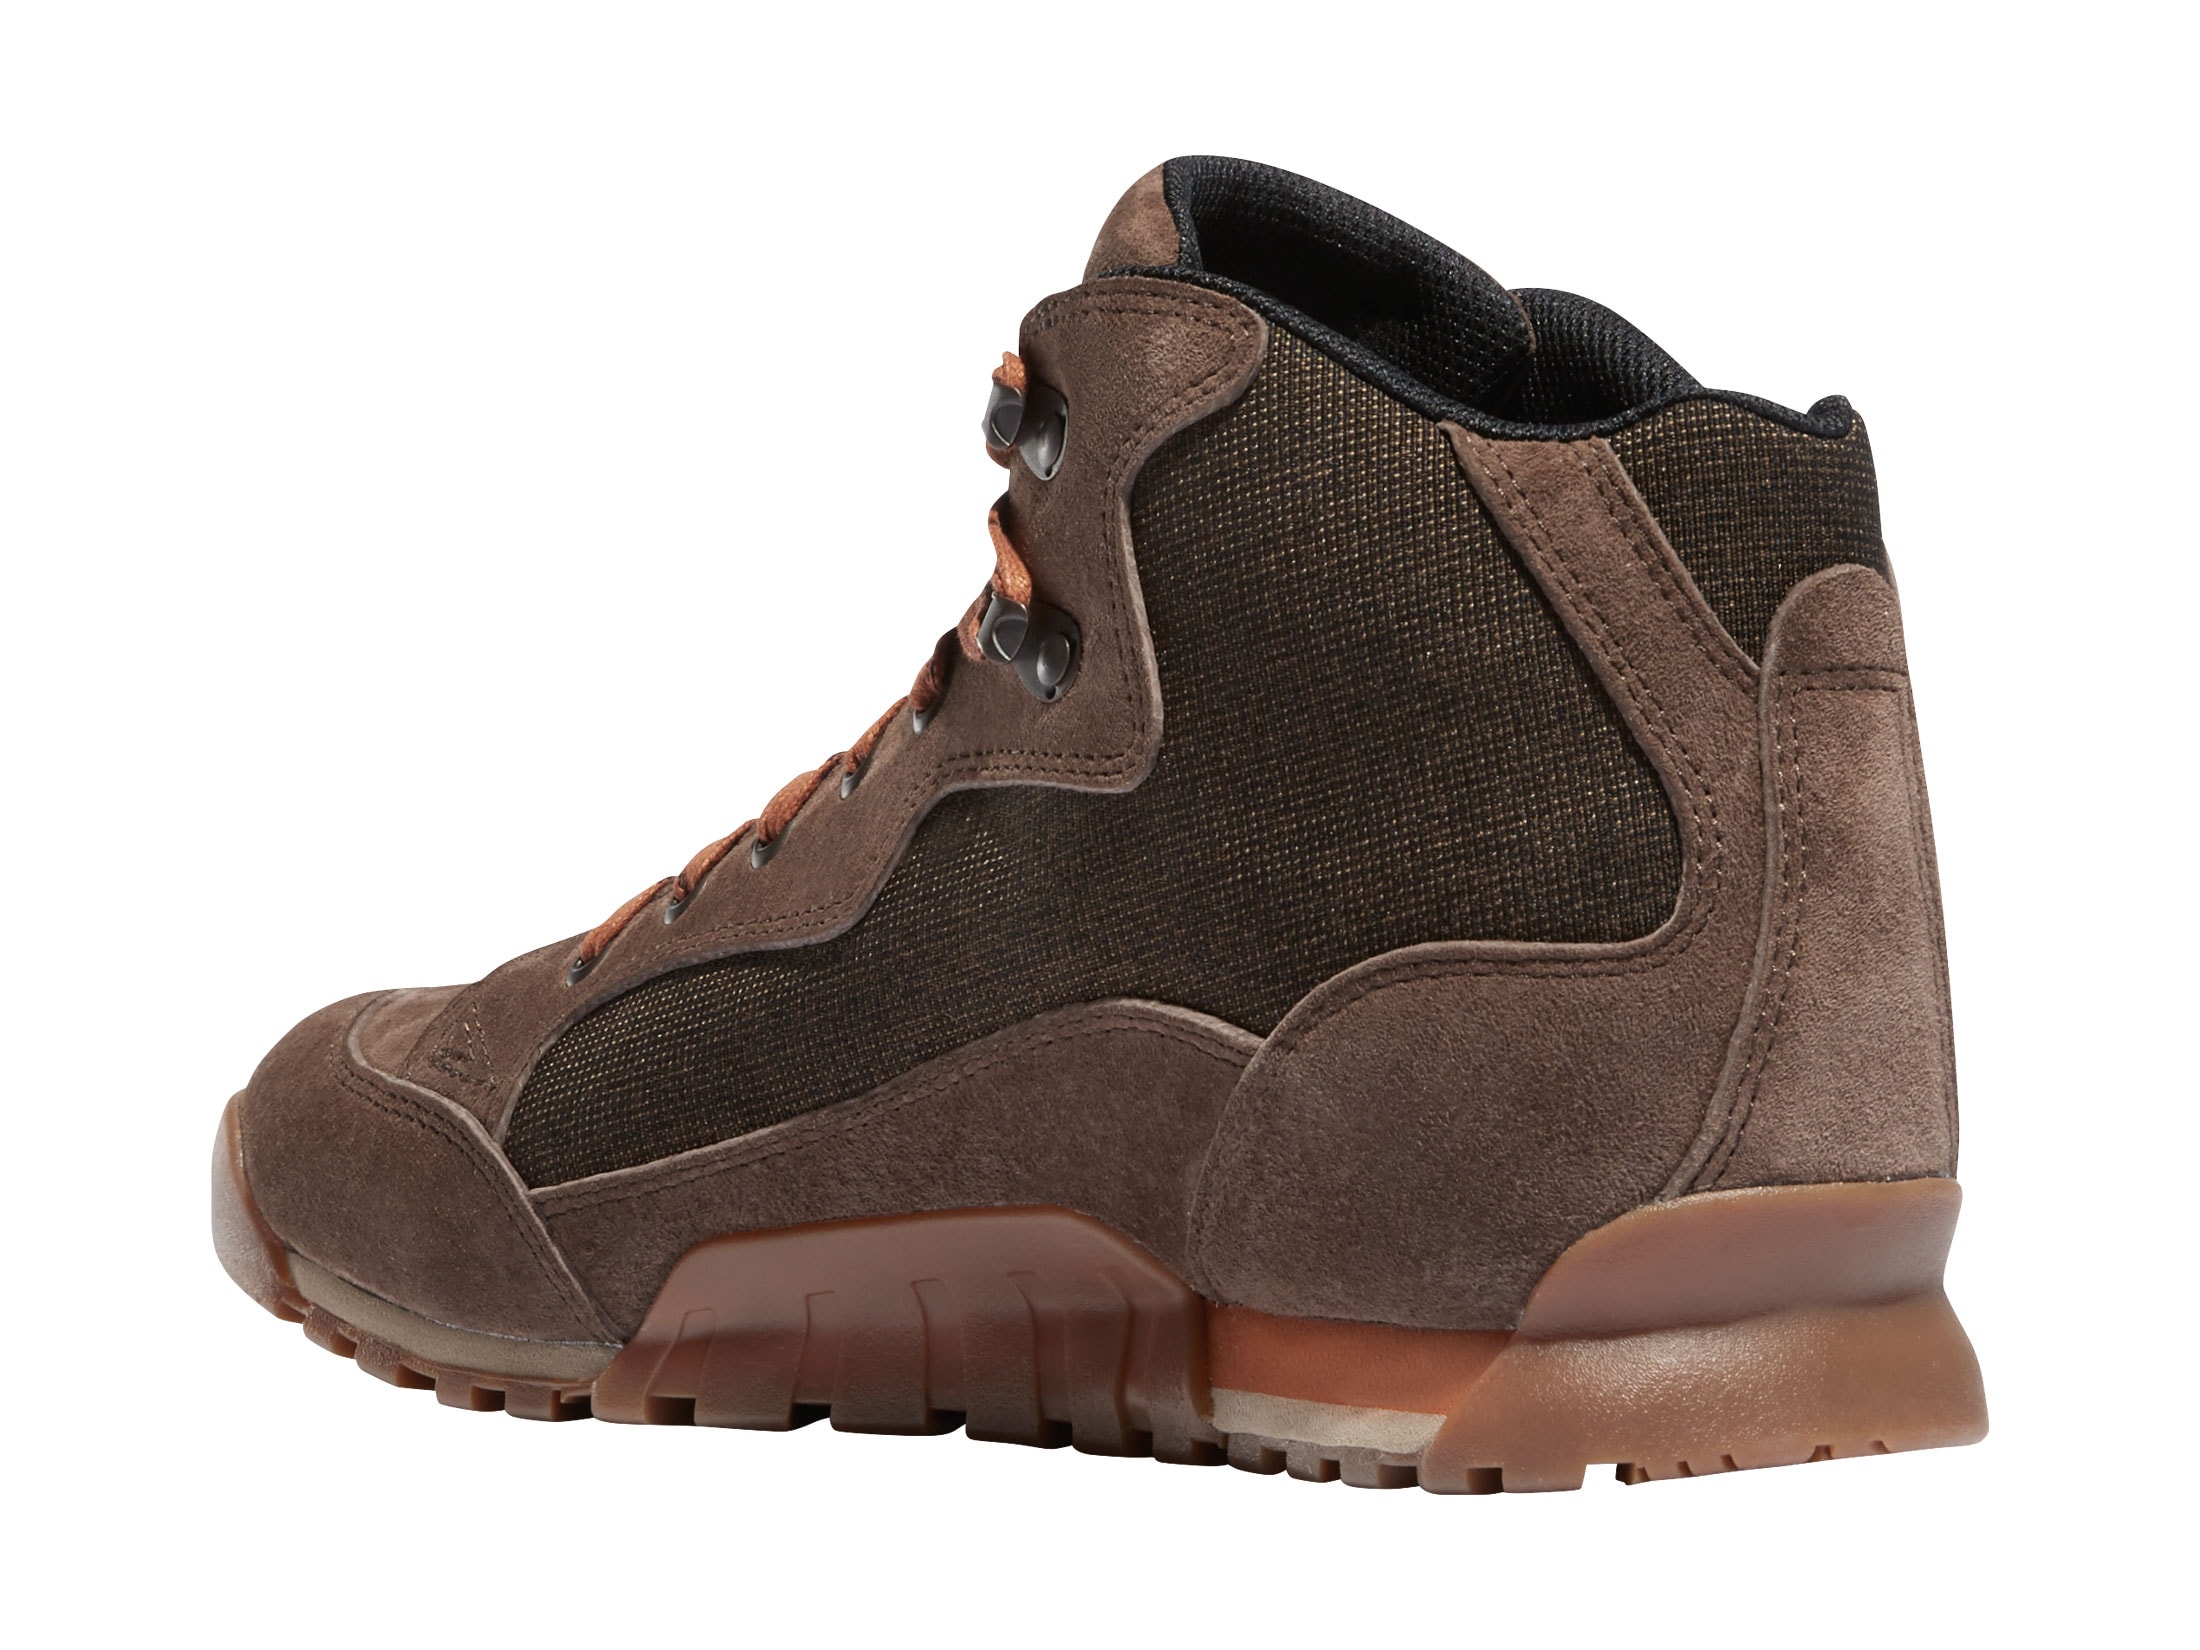 Danner Skyridge 4.5 Hiking Boots Suede/Nylon Dark Earth Men's 8 D